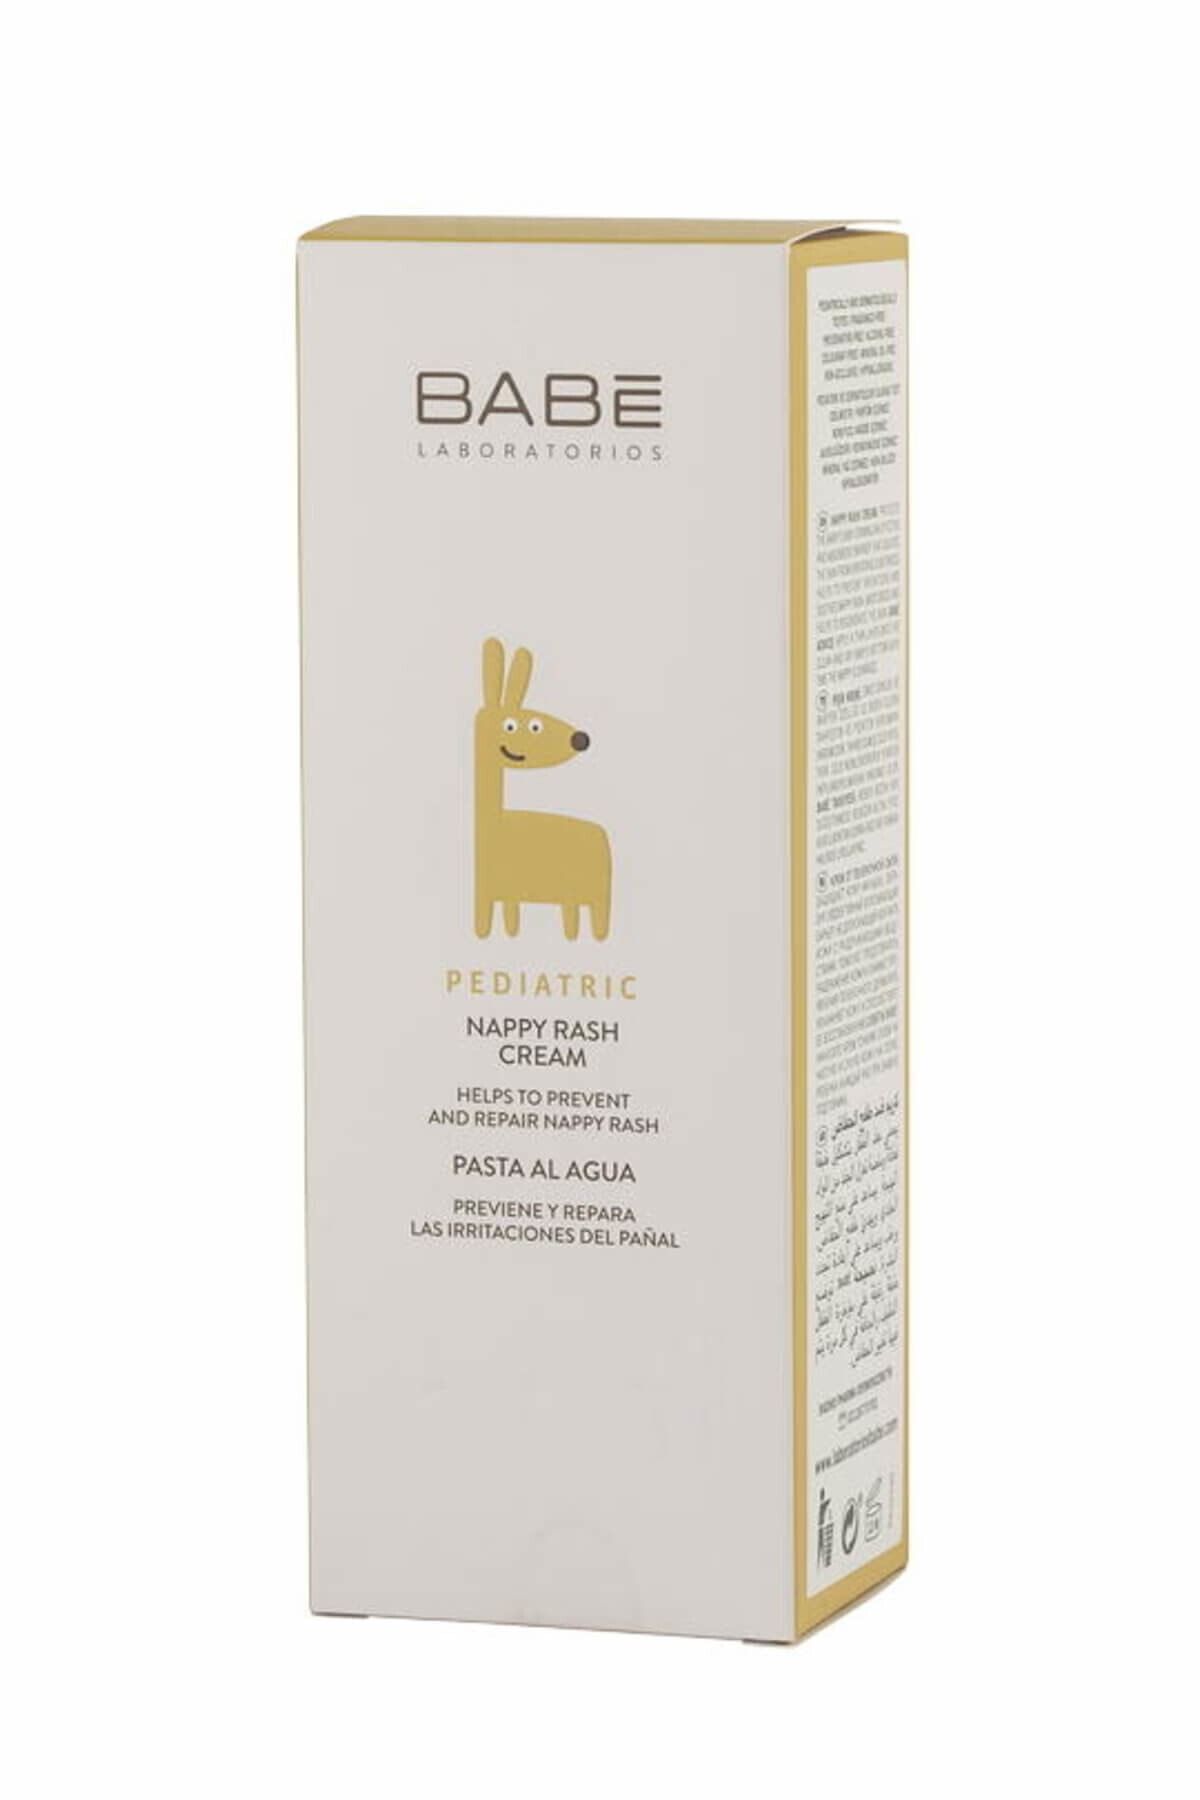 Babe Laboratorios Nappy Rash Cream 100ml